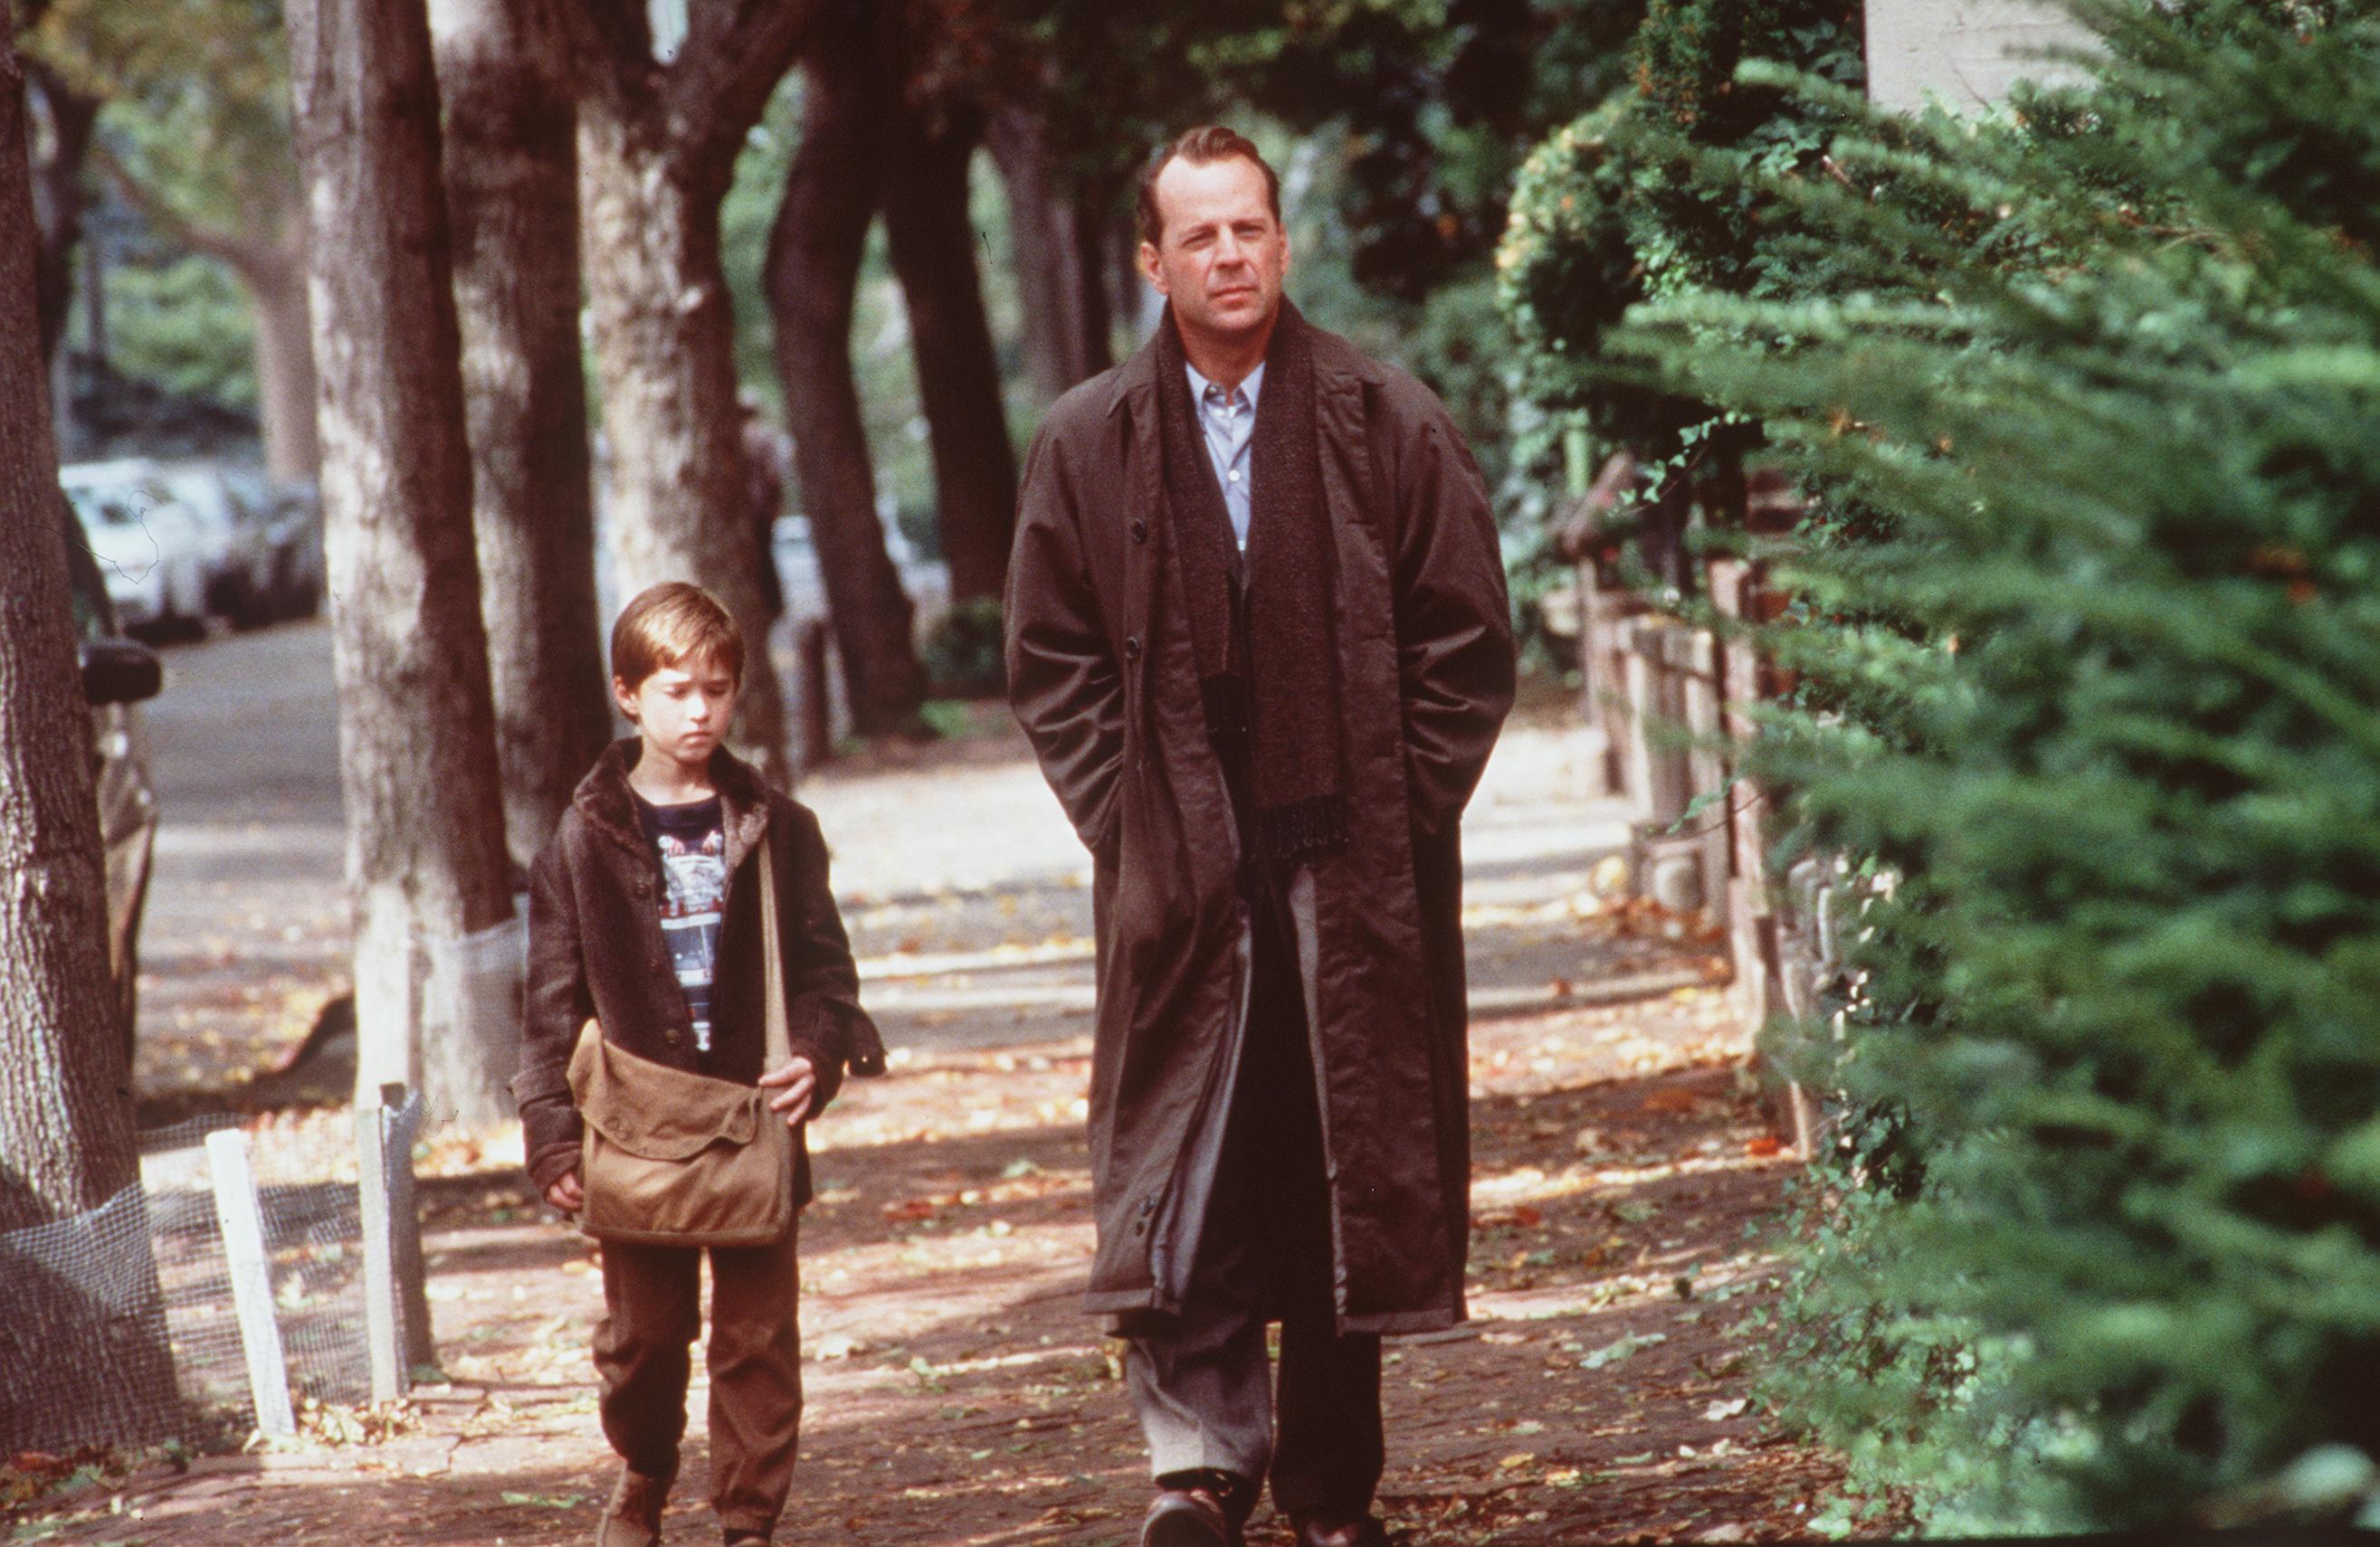 La estrella infantil y Bruce Willis en el plató de "The Sixth Sense", 1999 | Fuente: Getty Images